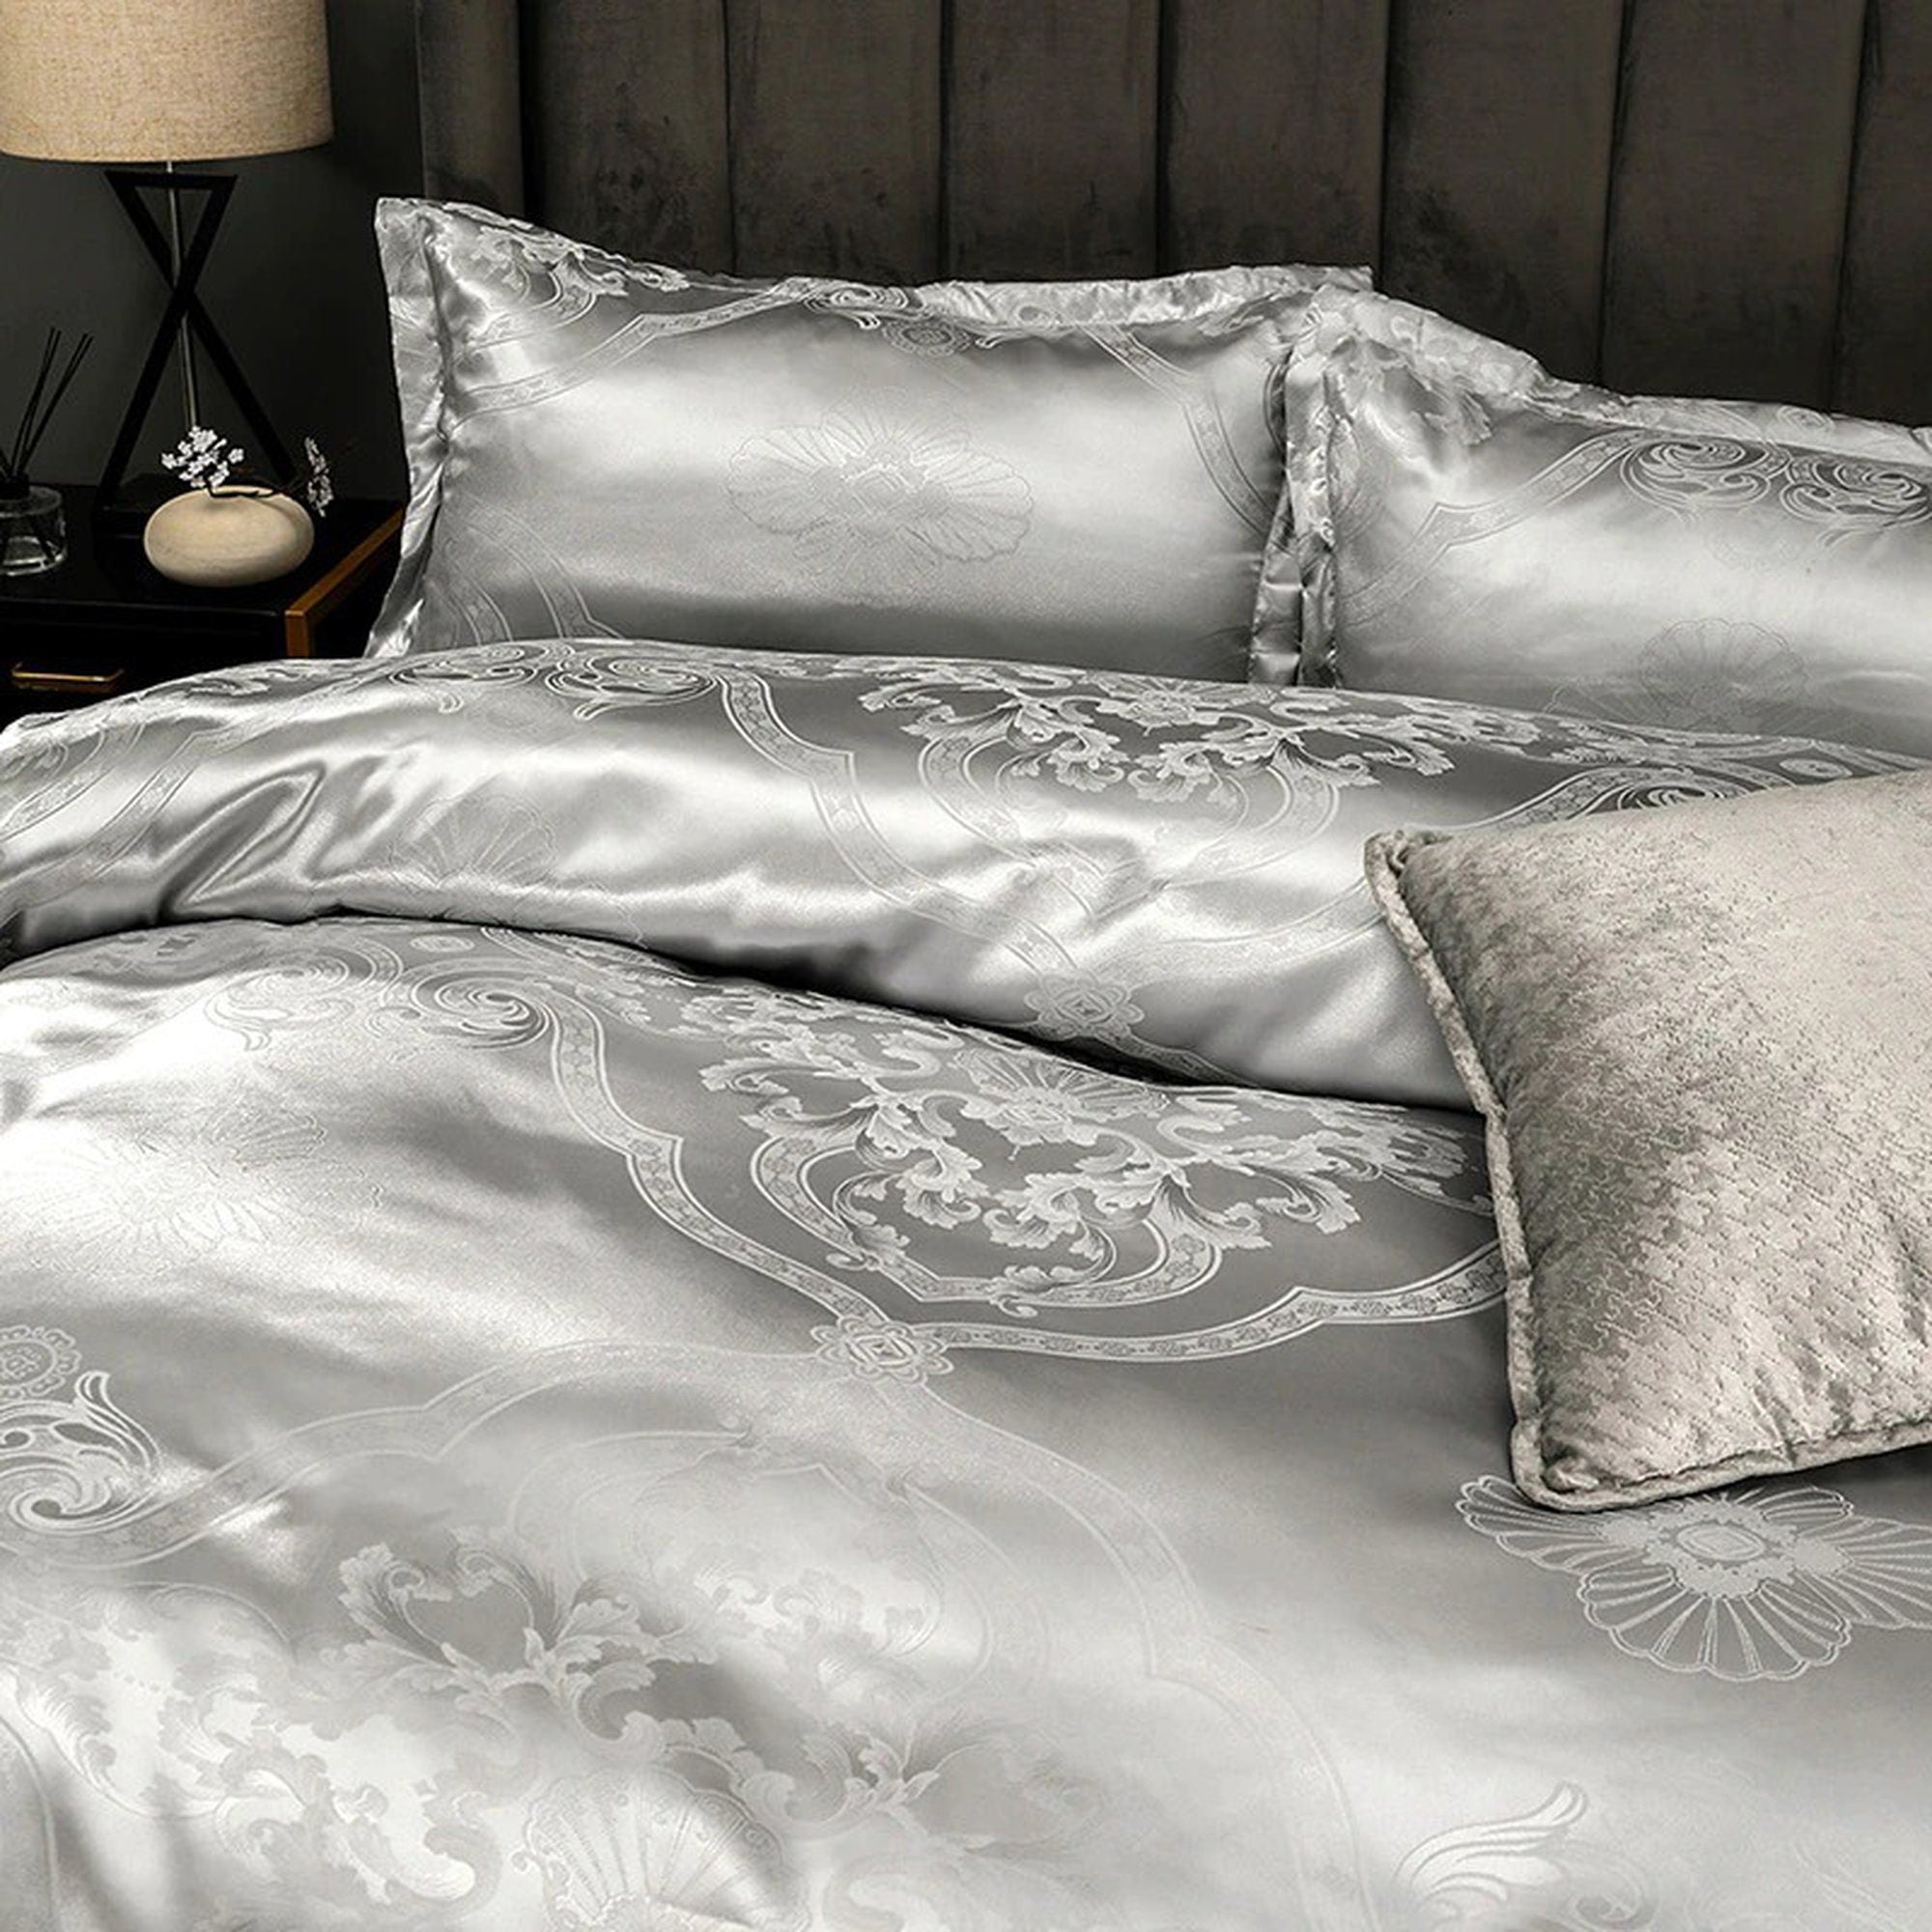 daintyduvet Luxury Silver Bedding made with Silky Jacquard Fabric, Damask Duvet Cover Set, Designer Bedding, Aesthetic Duvet King Queen Full Twin